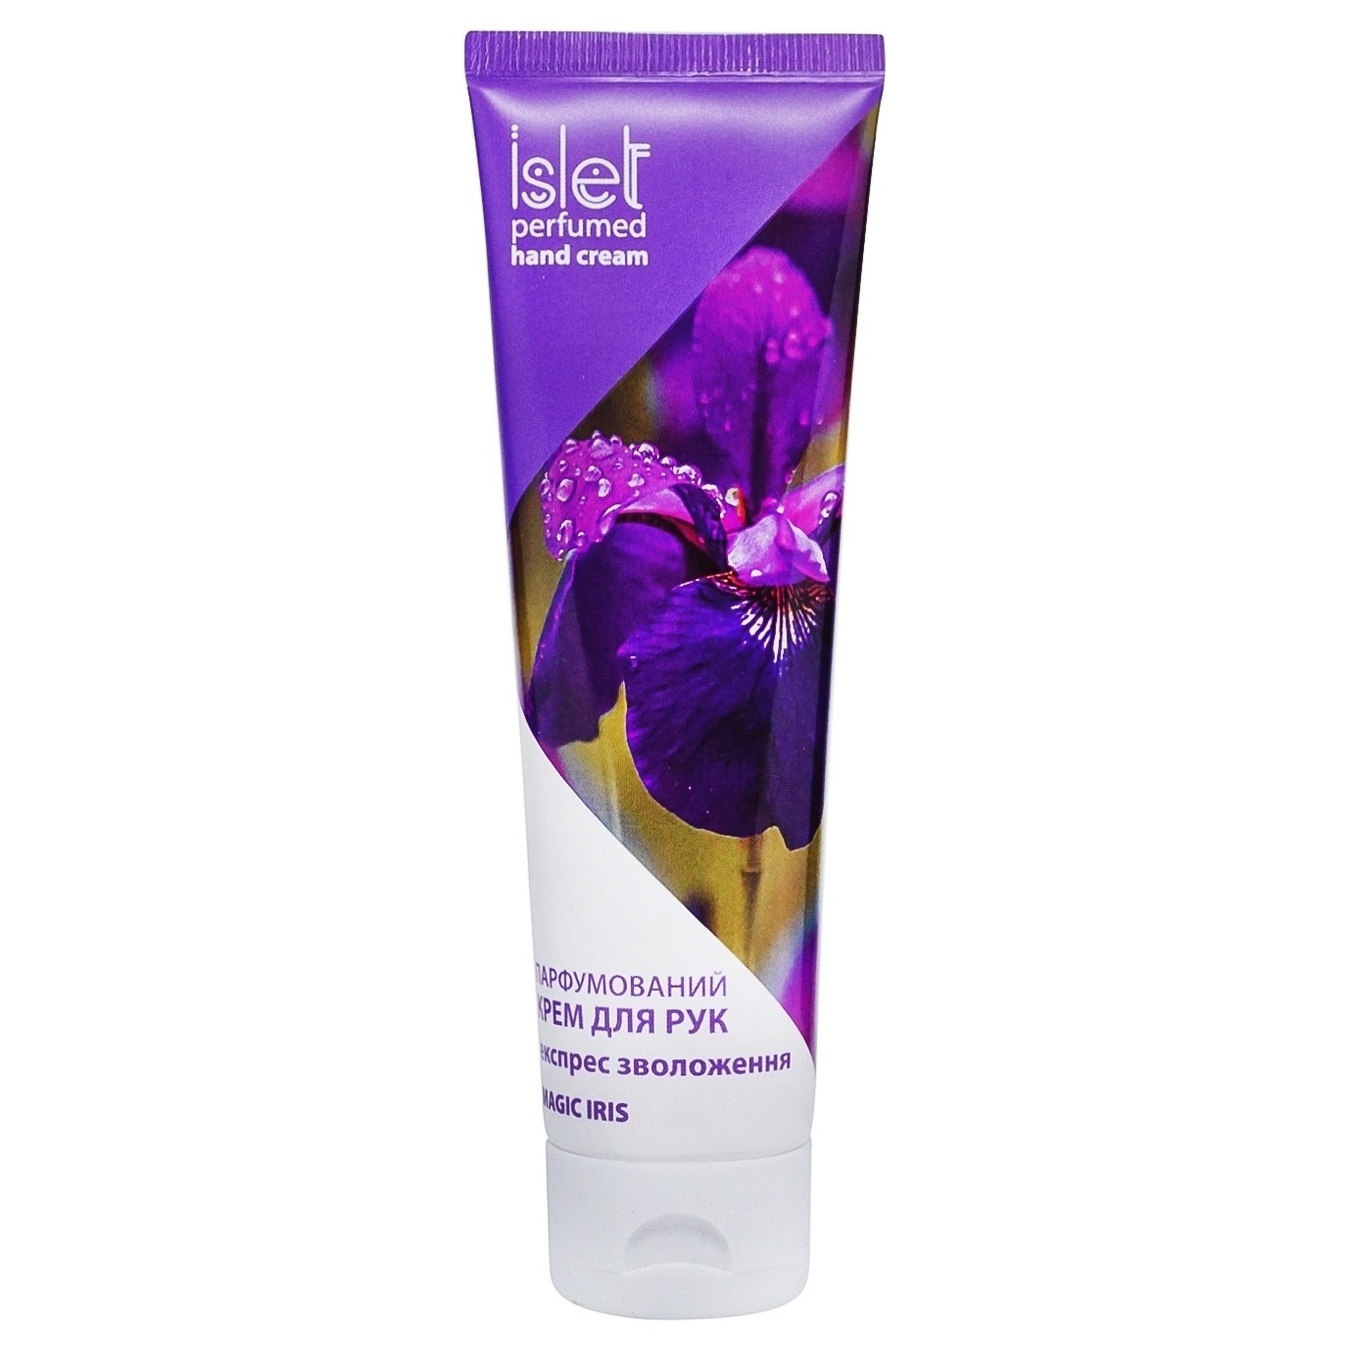 Islet hand cream perfumed express moisturizing amazing iris 90g